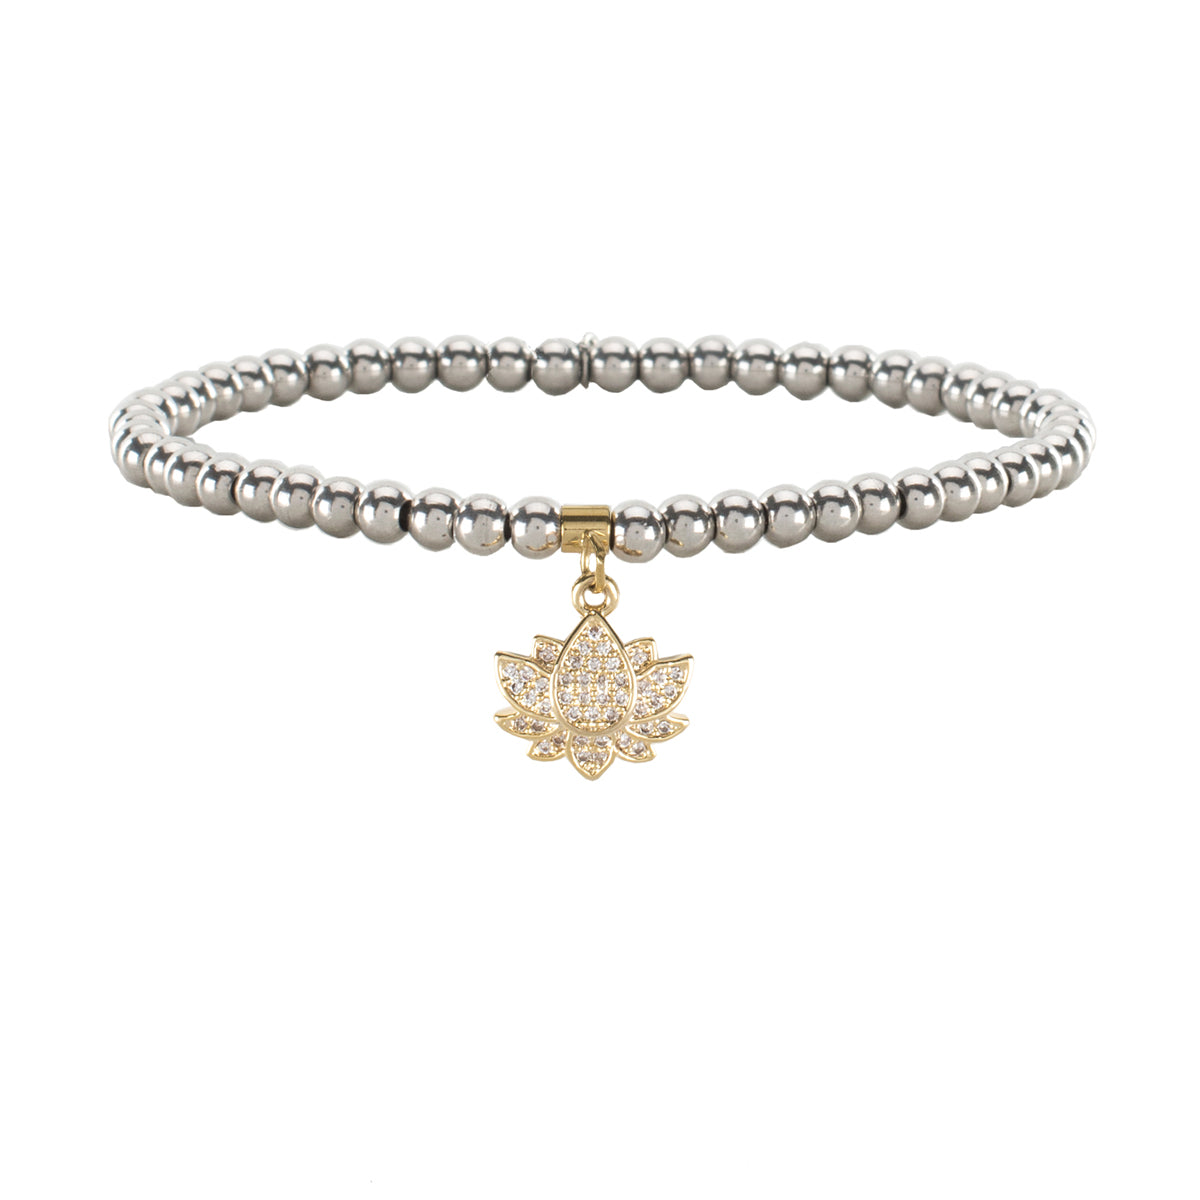 +Ireland Mini Silver Beaded Bracelet with Gold Pavé Lotus Charm